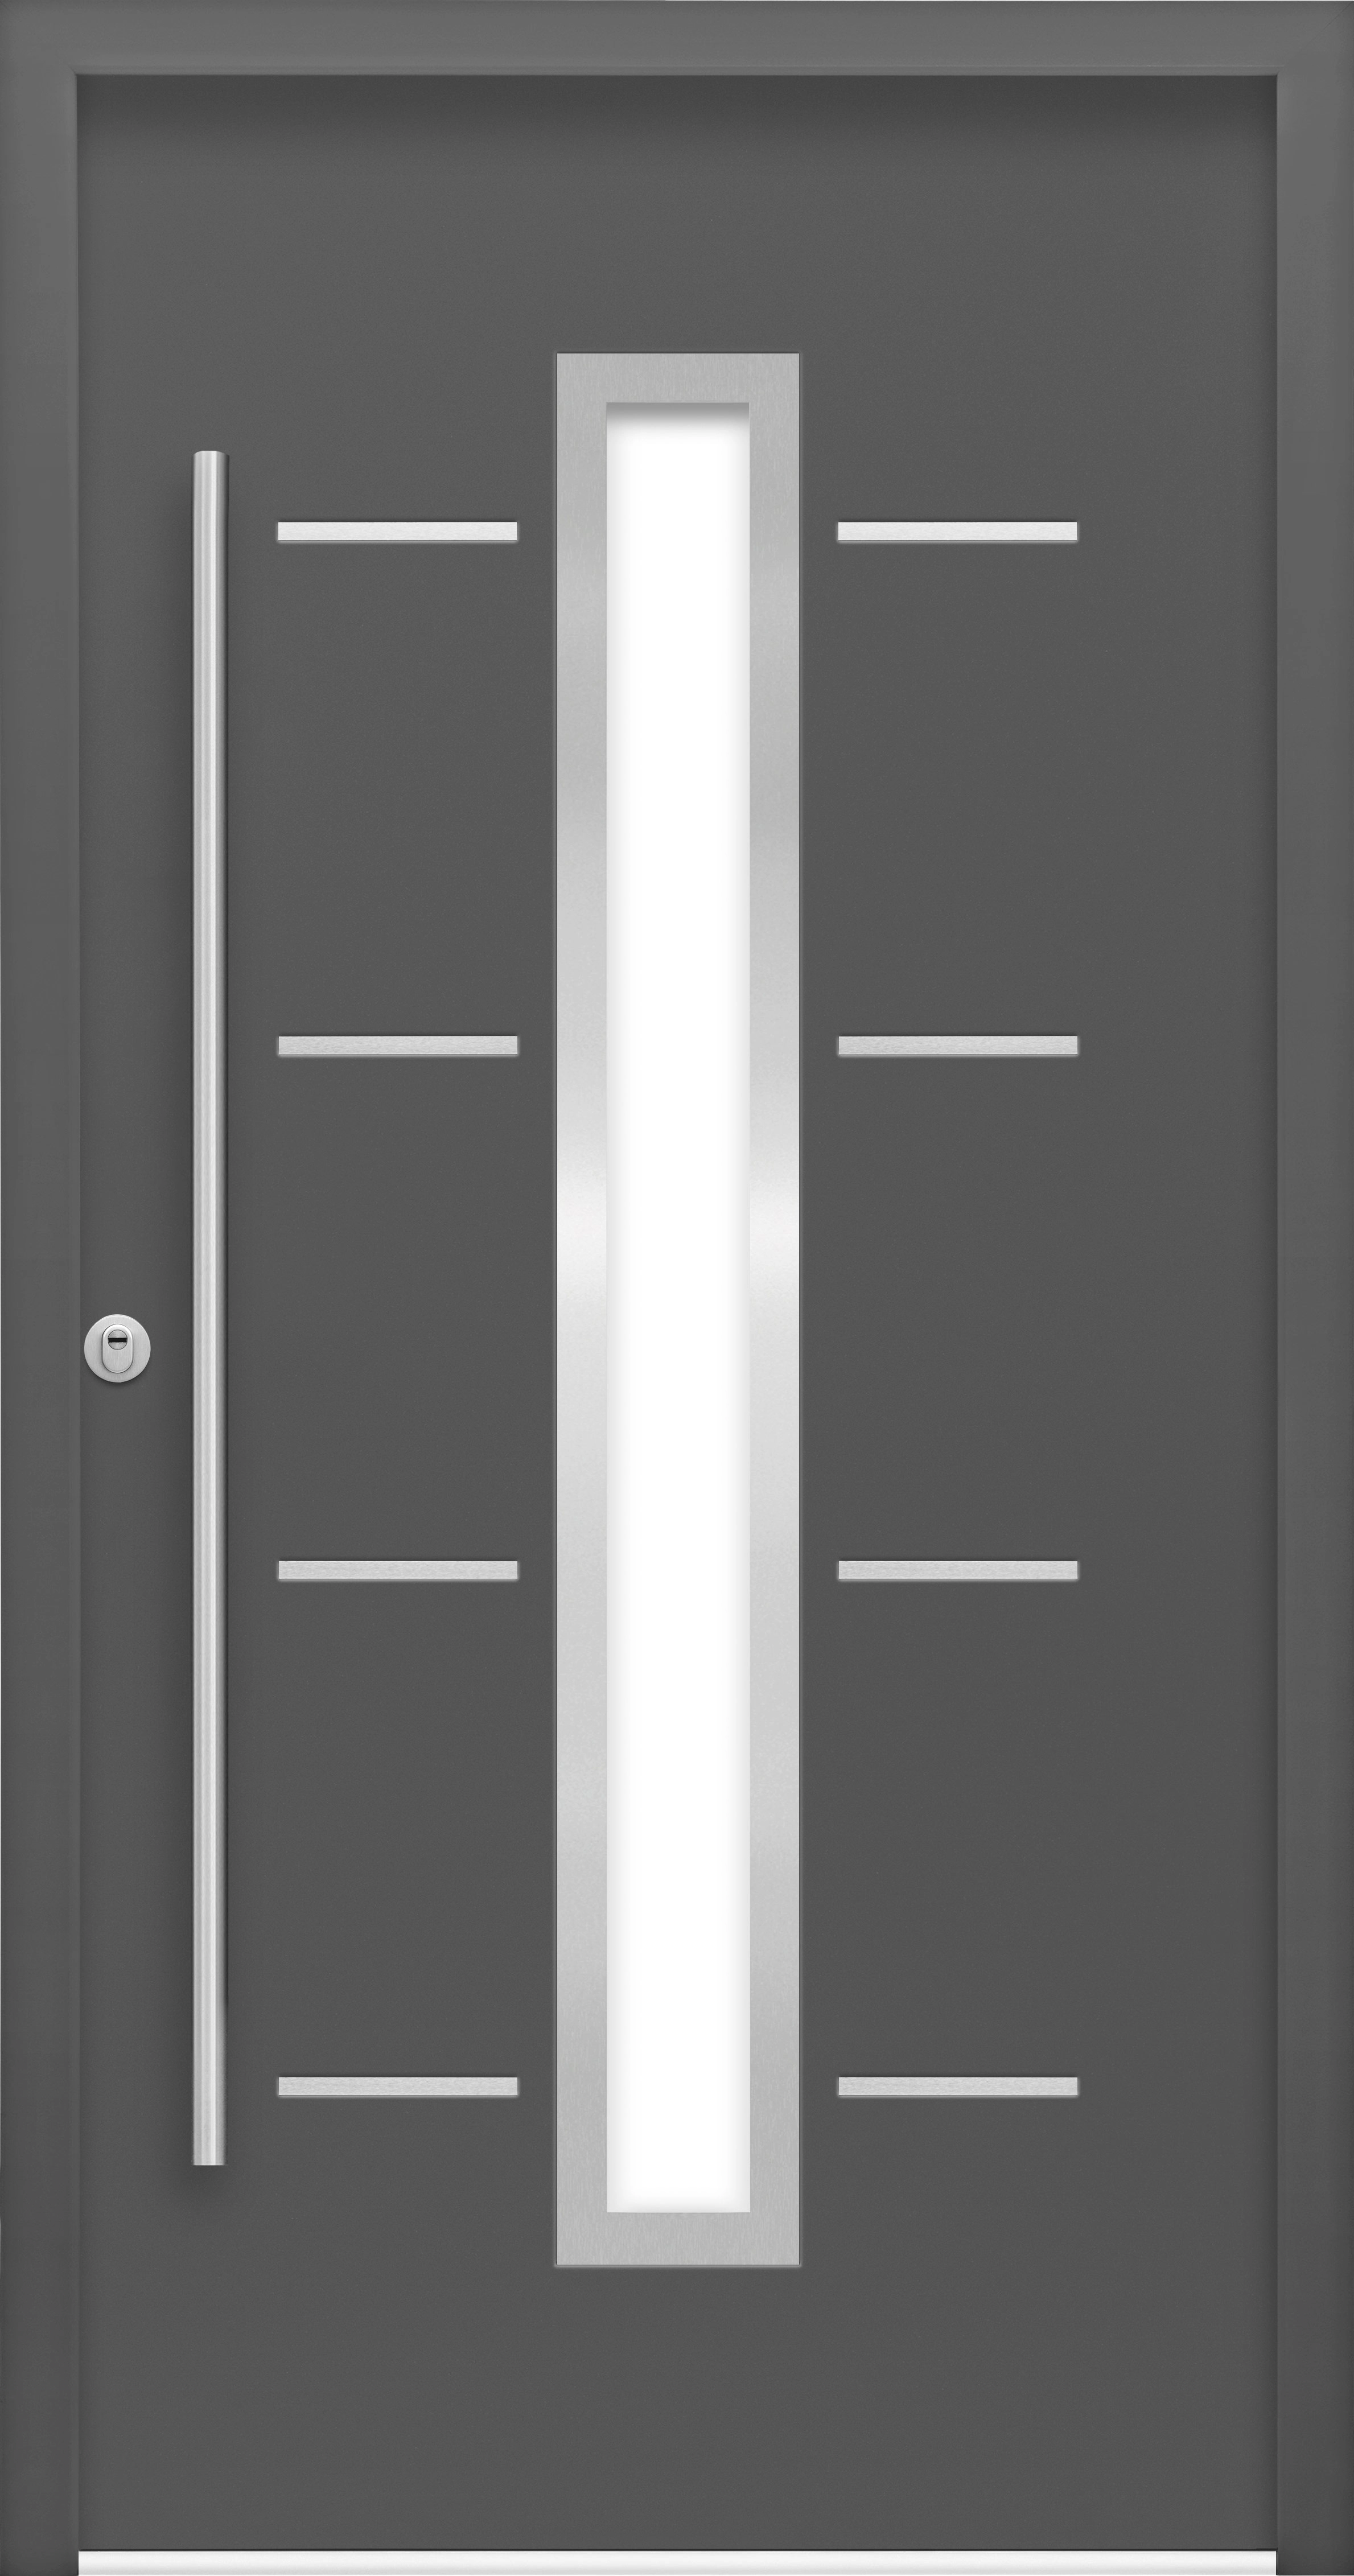 Aluminium-Fenster, verschiebbare-Türen, Faltentüren, automatische